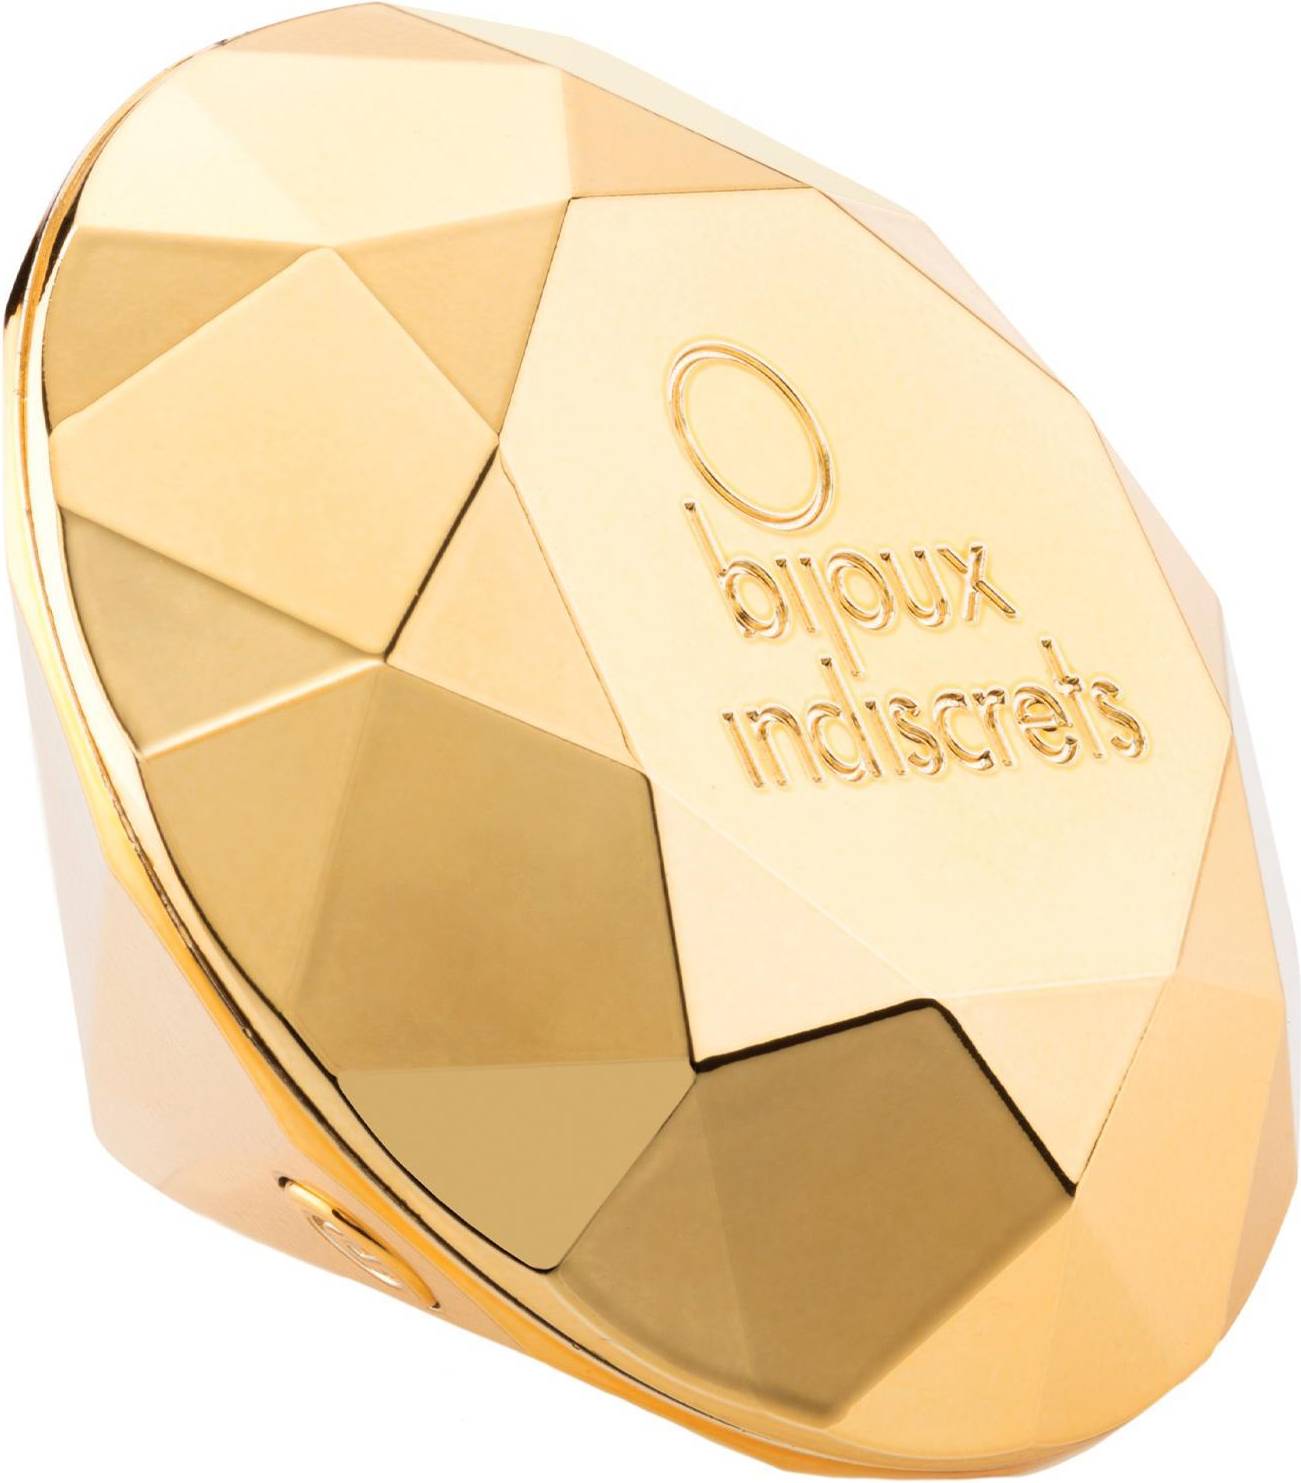  Bild på Bijoux Indiscrets Twenty One Vibrating Diamond vibrator